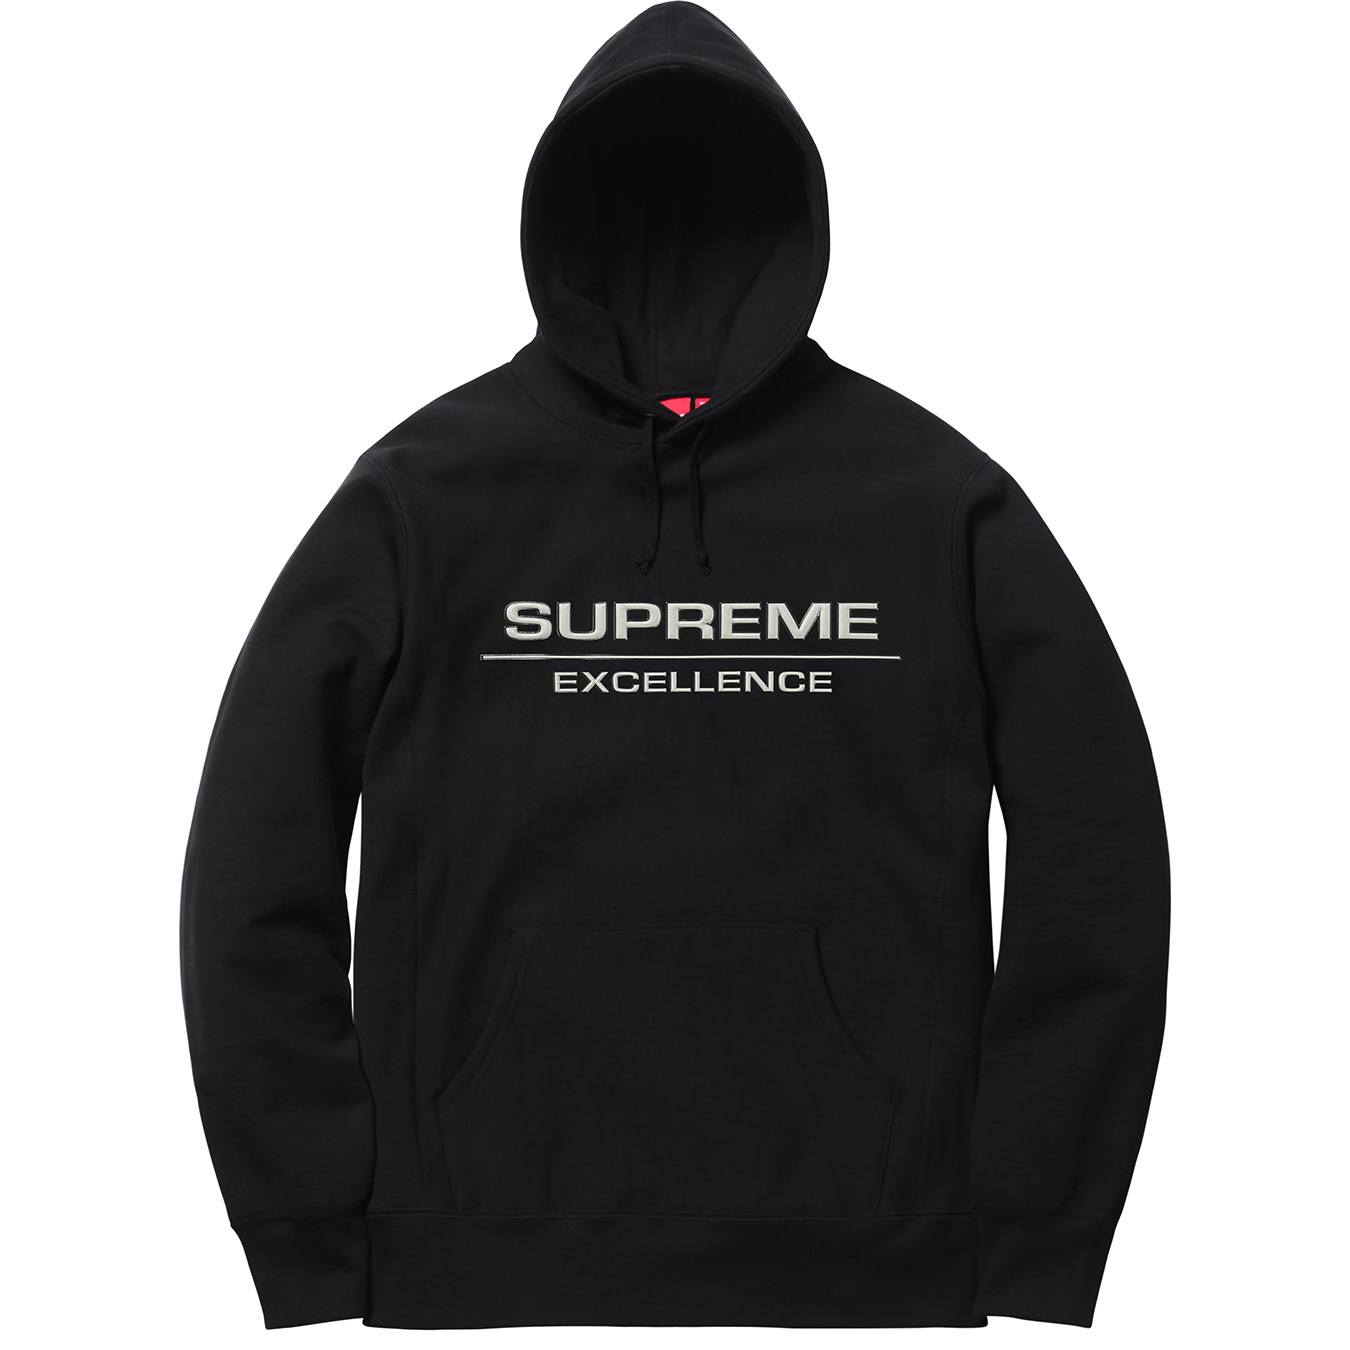 Supreme Reflective Excellence Hooded Sweatshirt Black Men's - FW17 